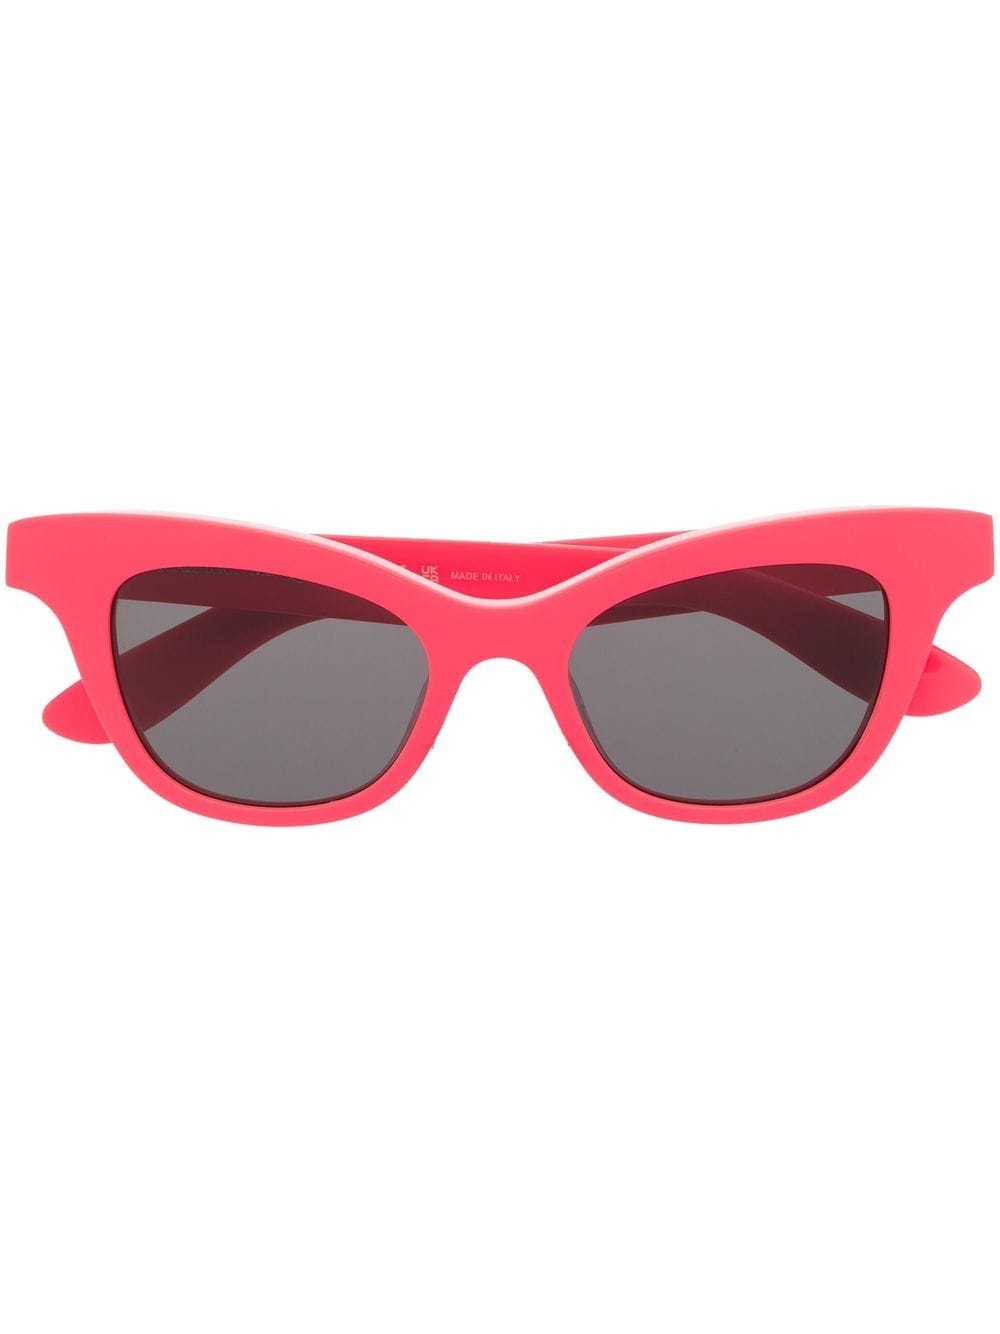 Tinted cat-eye sunglasses